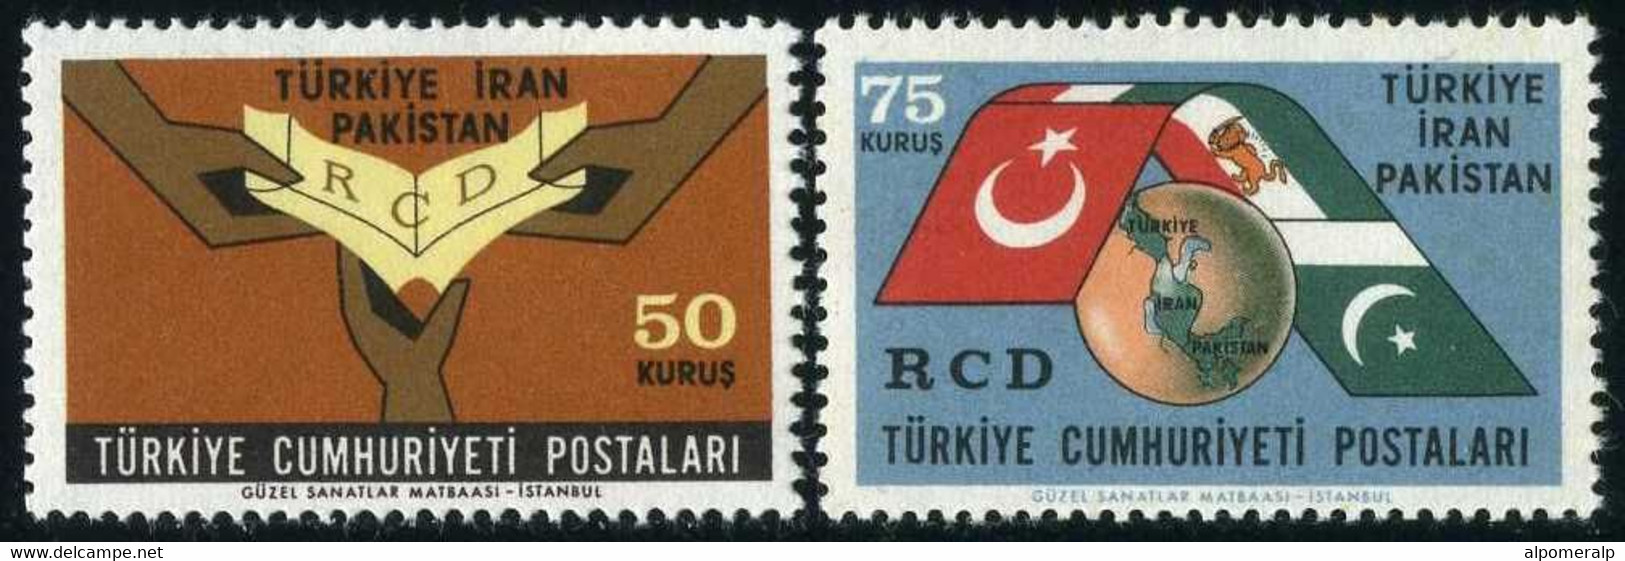 Turkey 1965 Mi 1953-1954 MNH RCD | Iran-Turkey-Pakistan, Regional Cooperation For Development - Ongebruikt